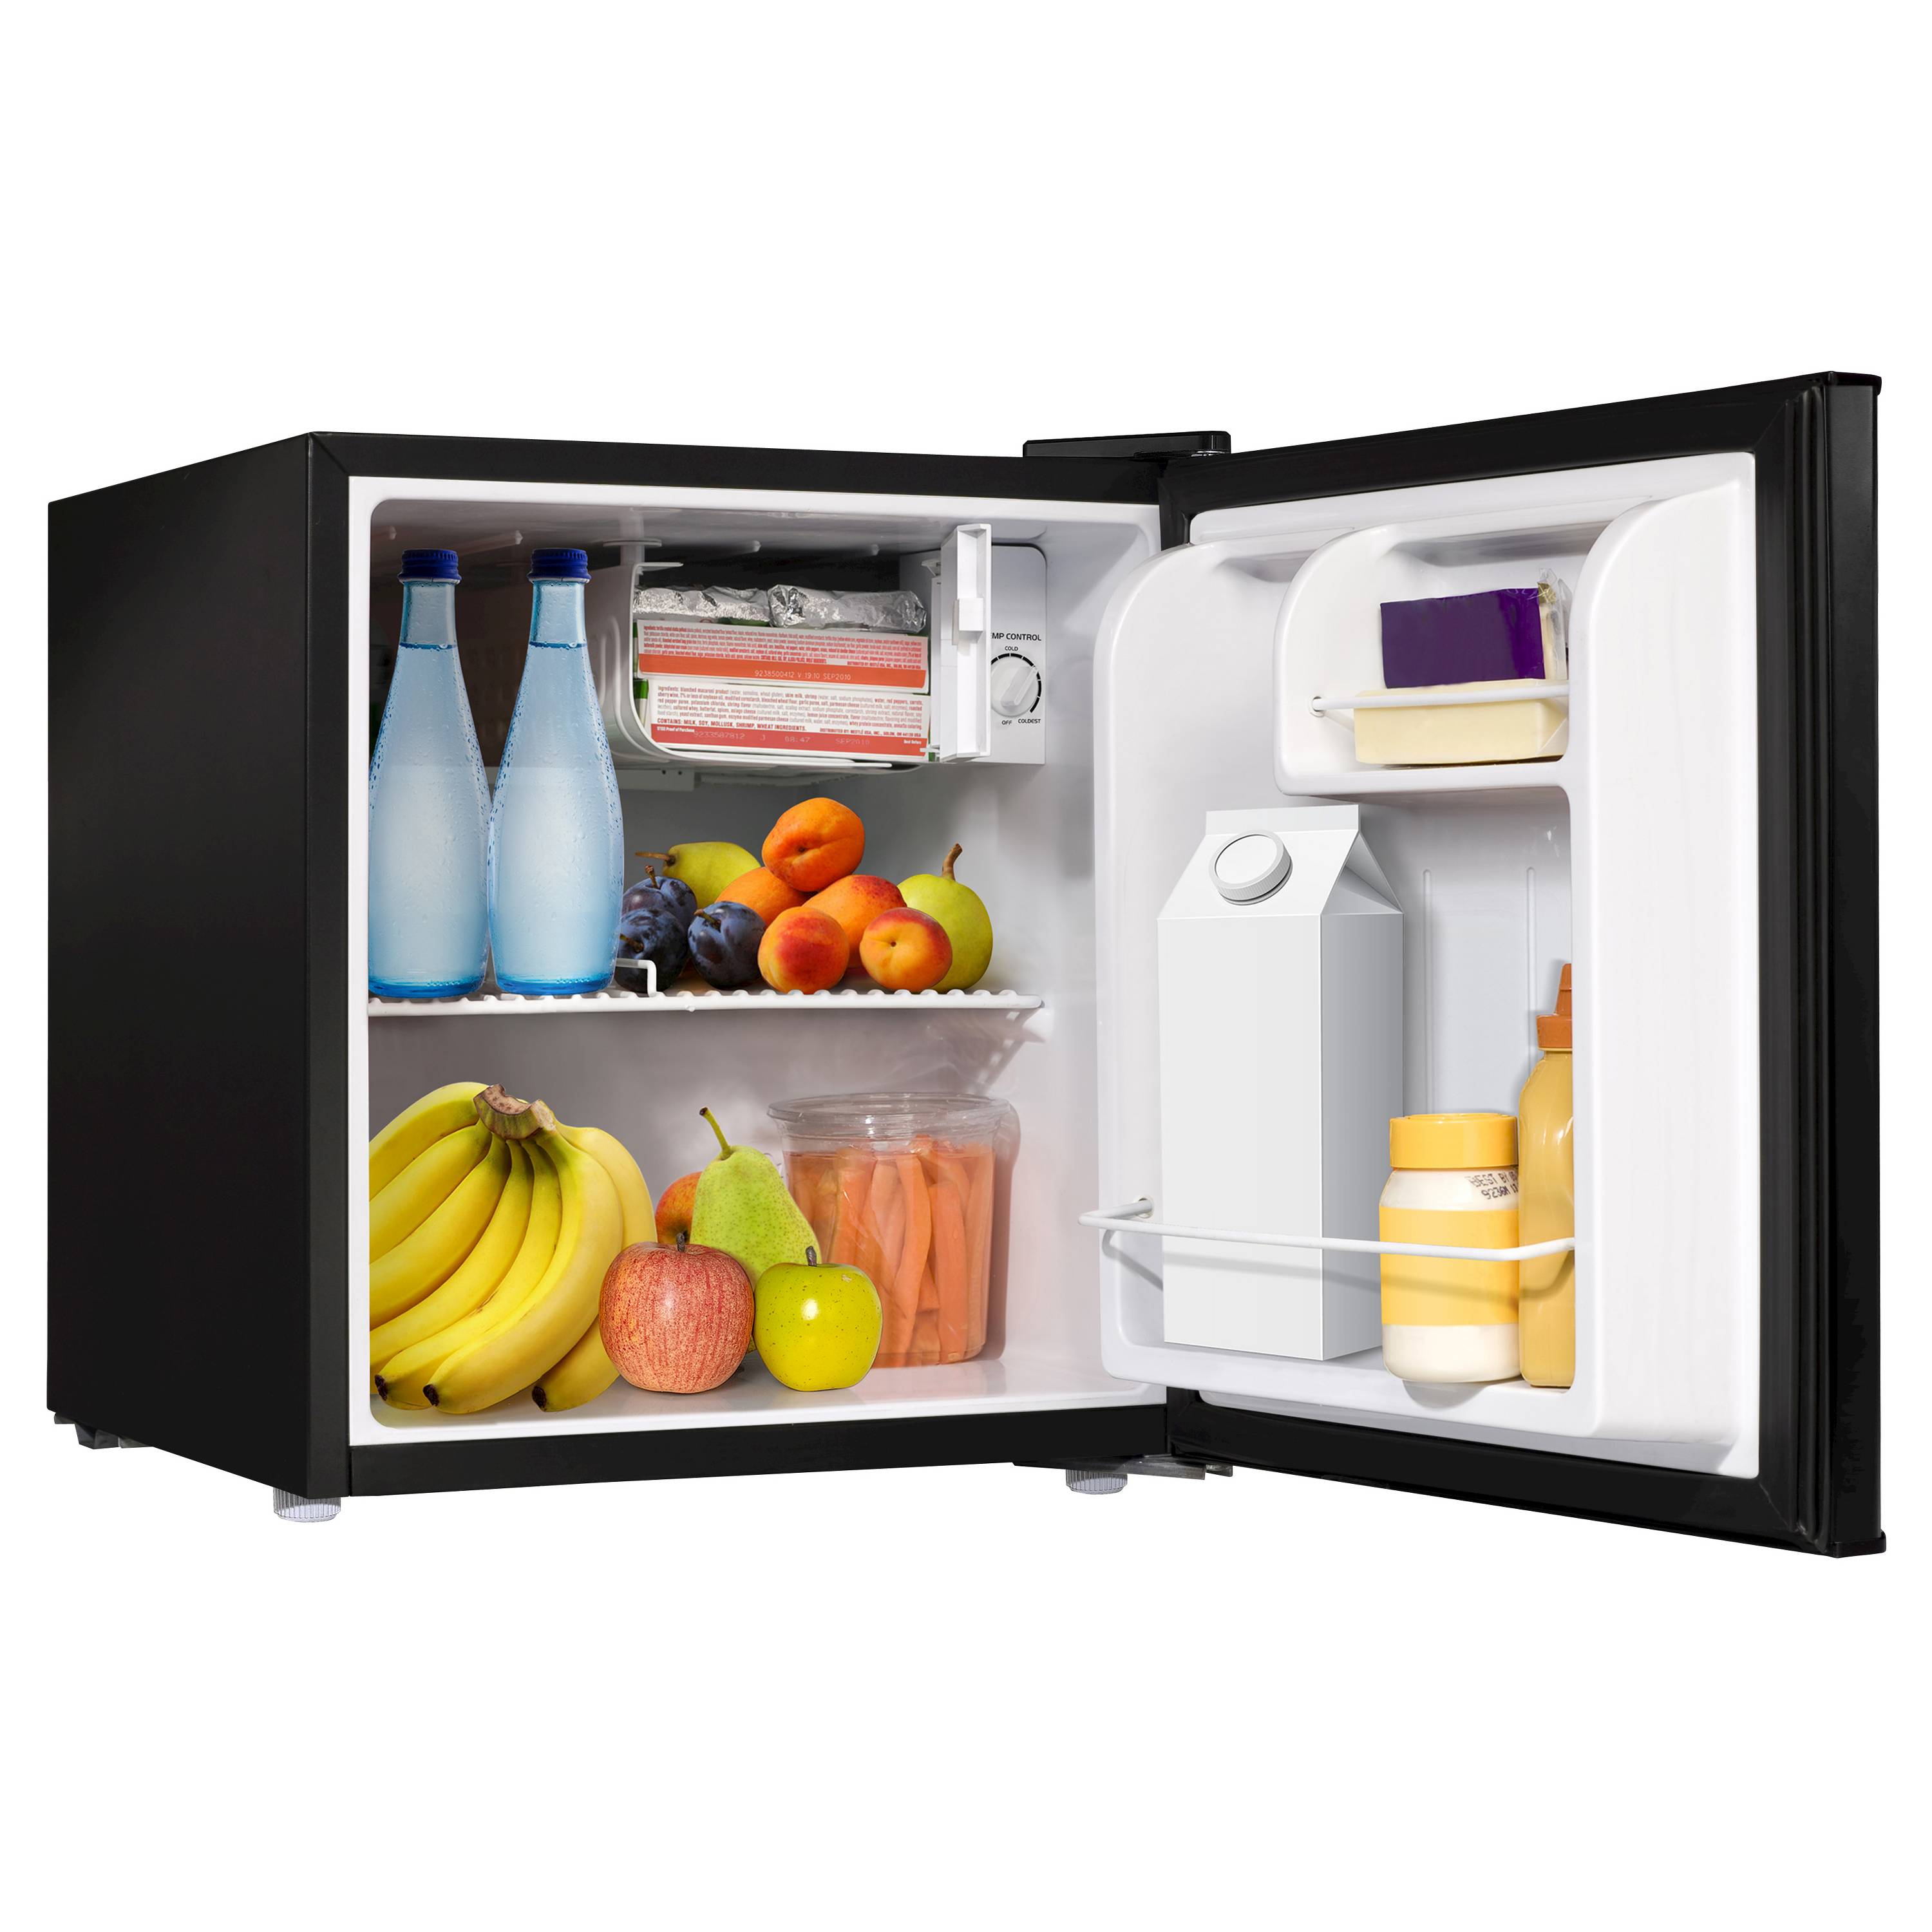 Sunbeam 1.7 cu ft mini fridge for $58, free shipping